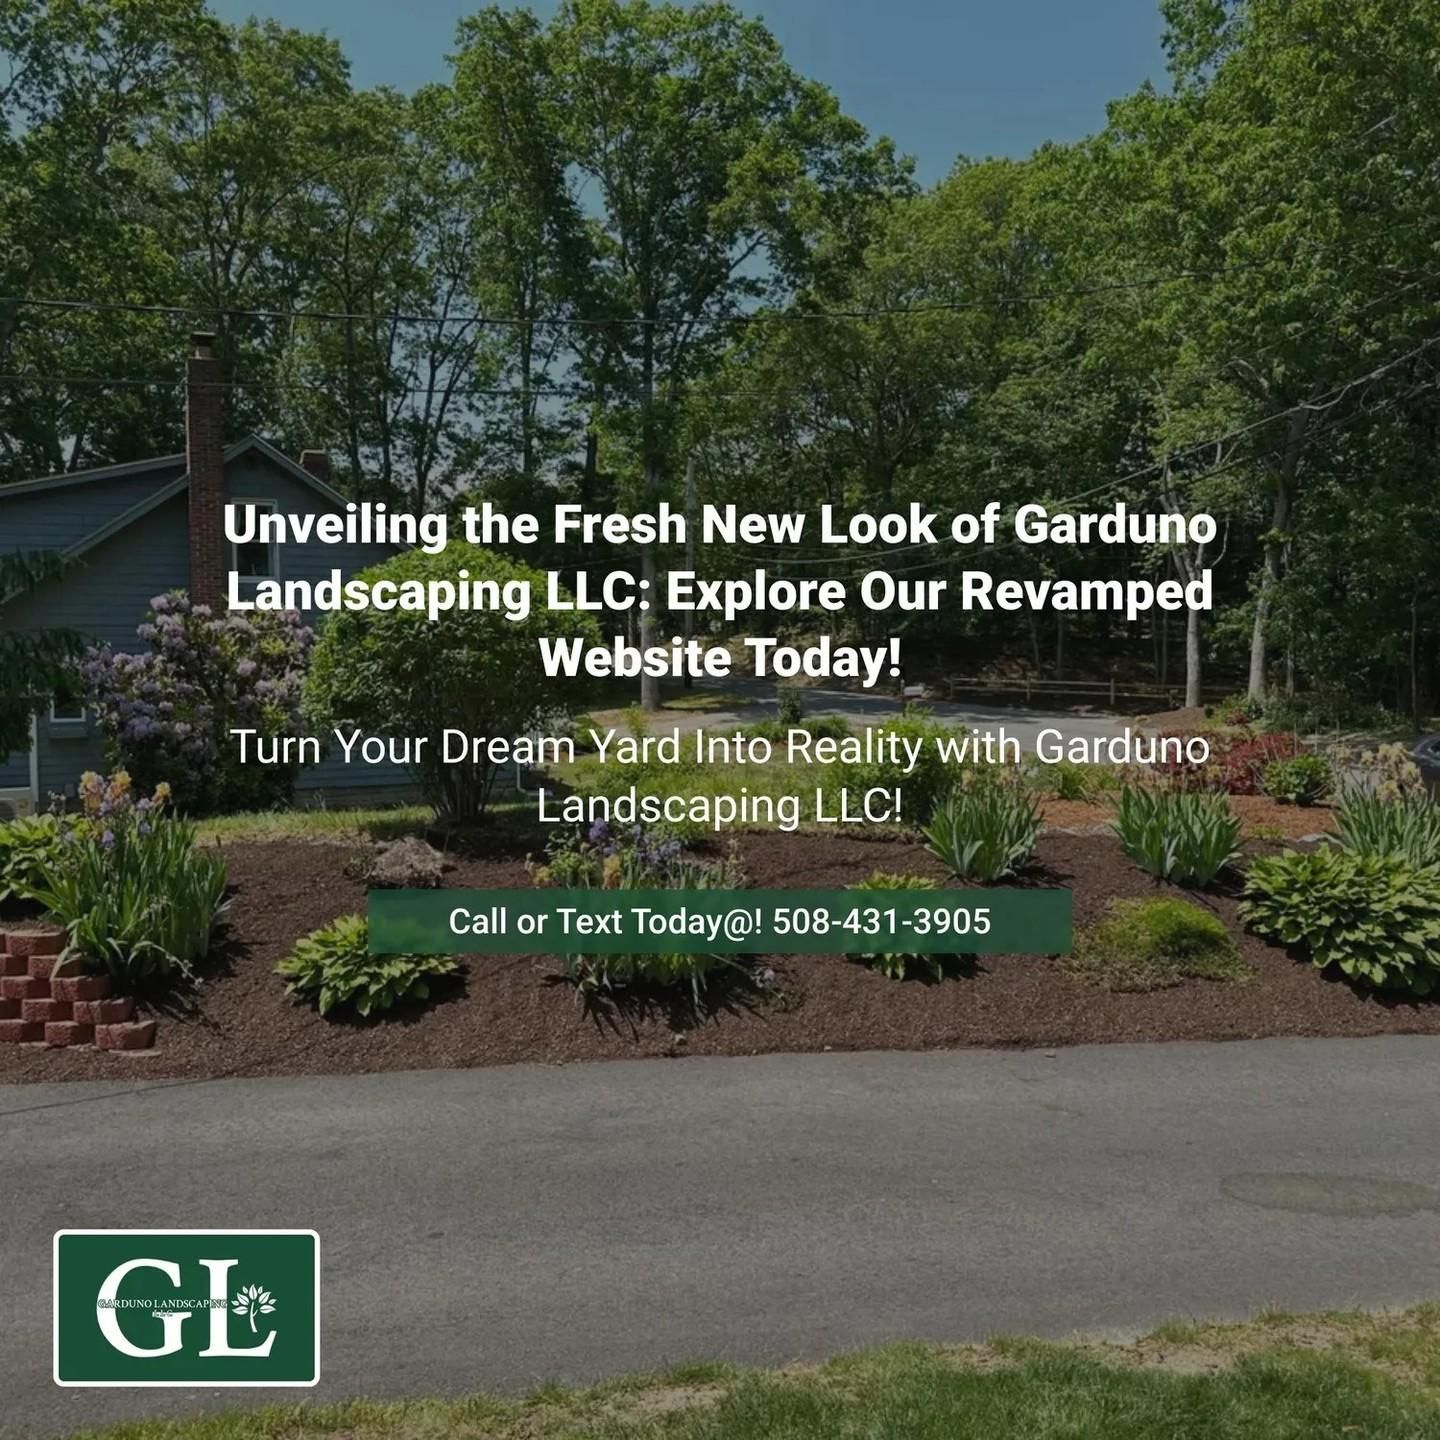  for Garduno Landscaping LLC in Cumberland, RI